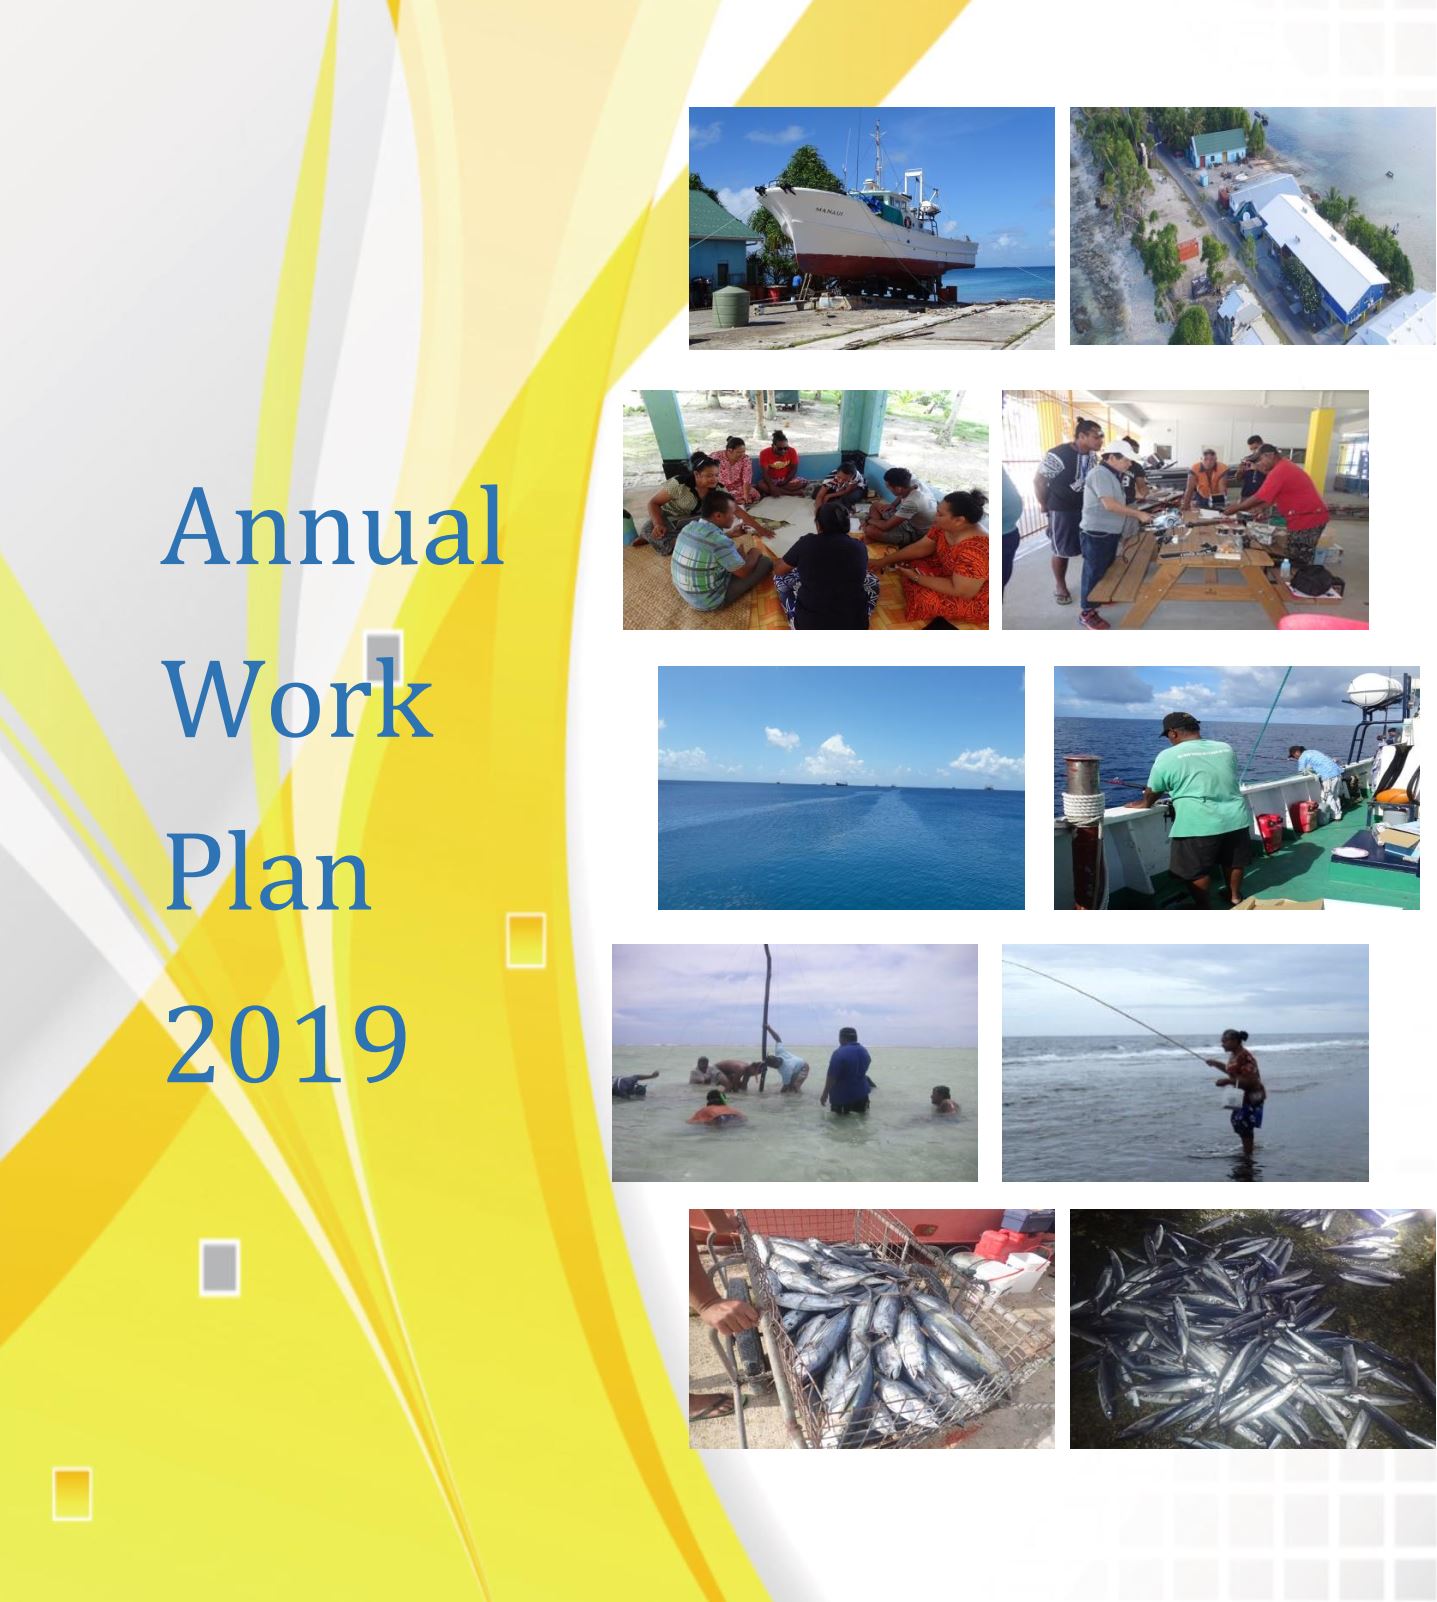 Annual Work Plan 2019